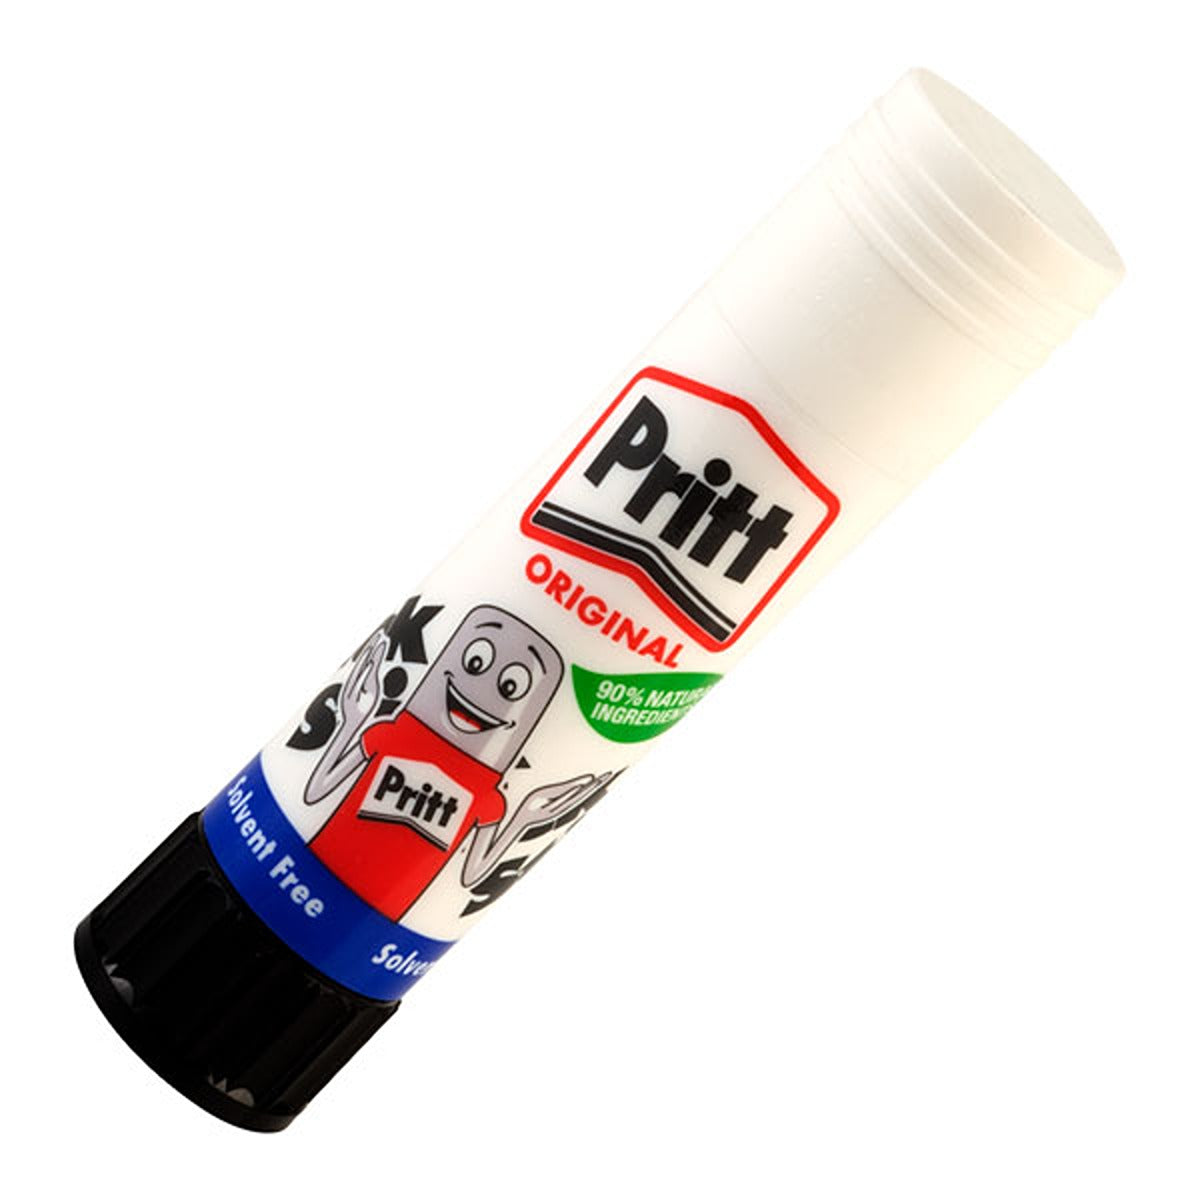 A tube of Pritt Stick Glue (11g) on a white background.